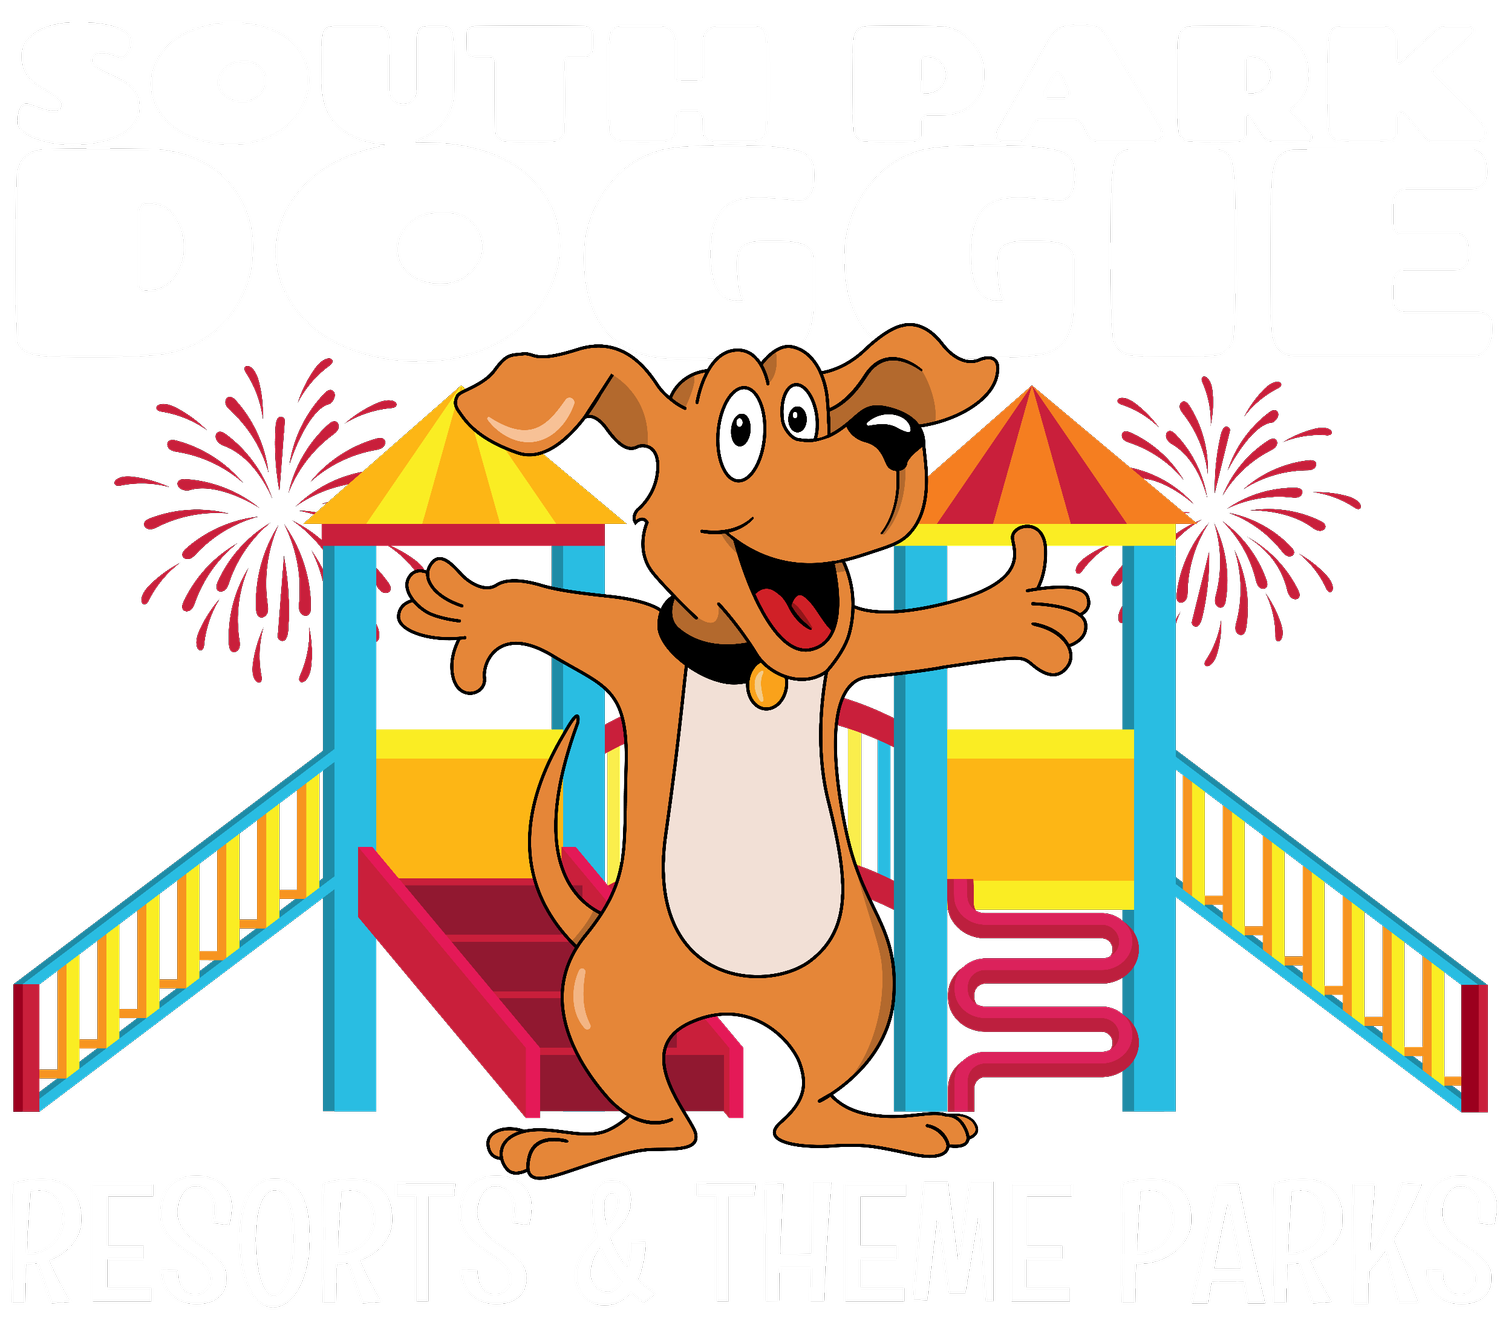 South Park Doggie – Adventureland (South Bay)